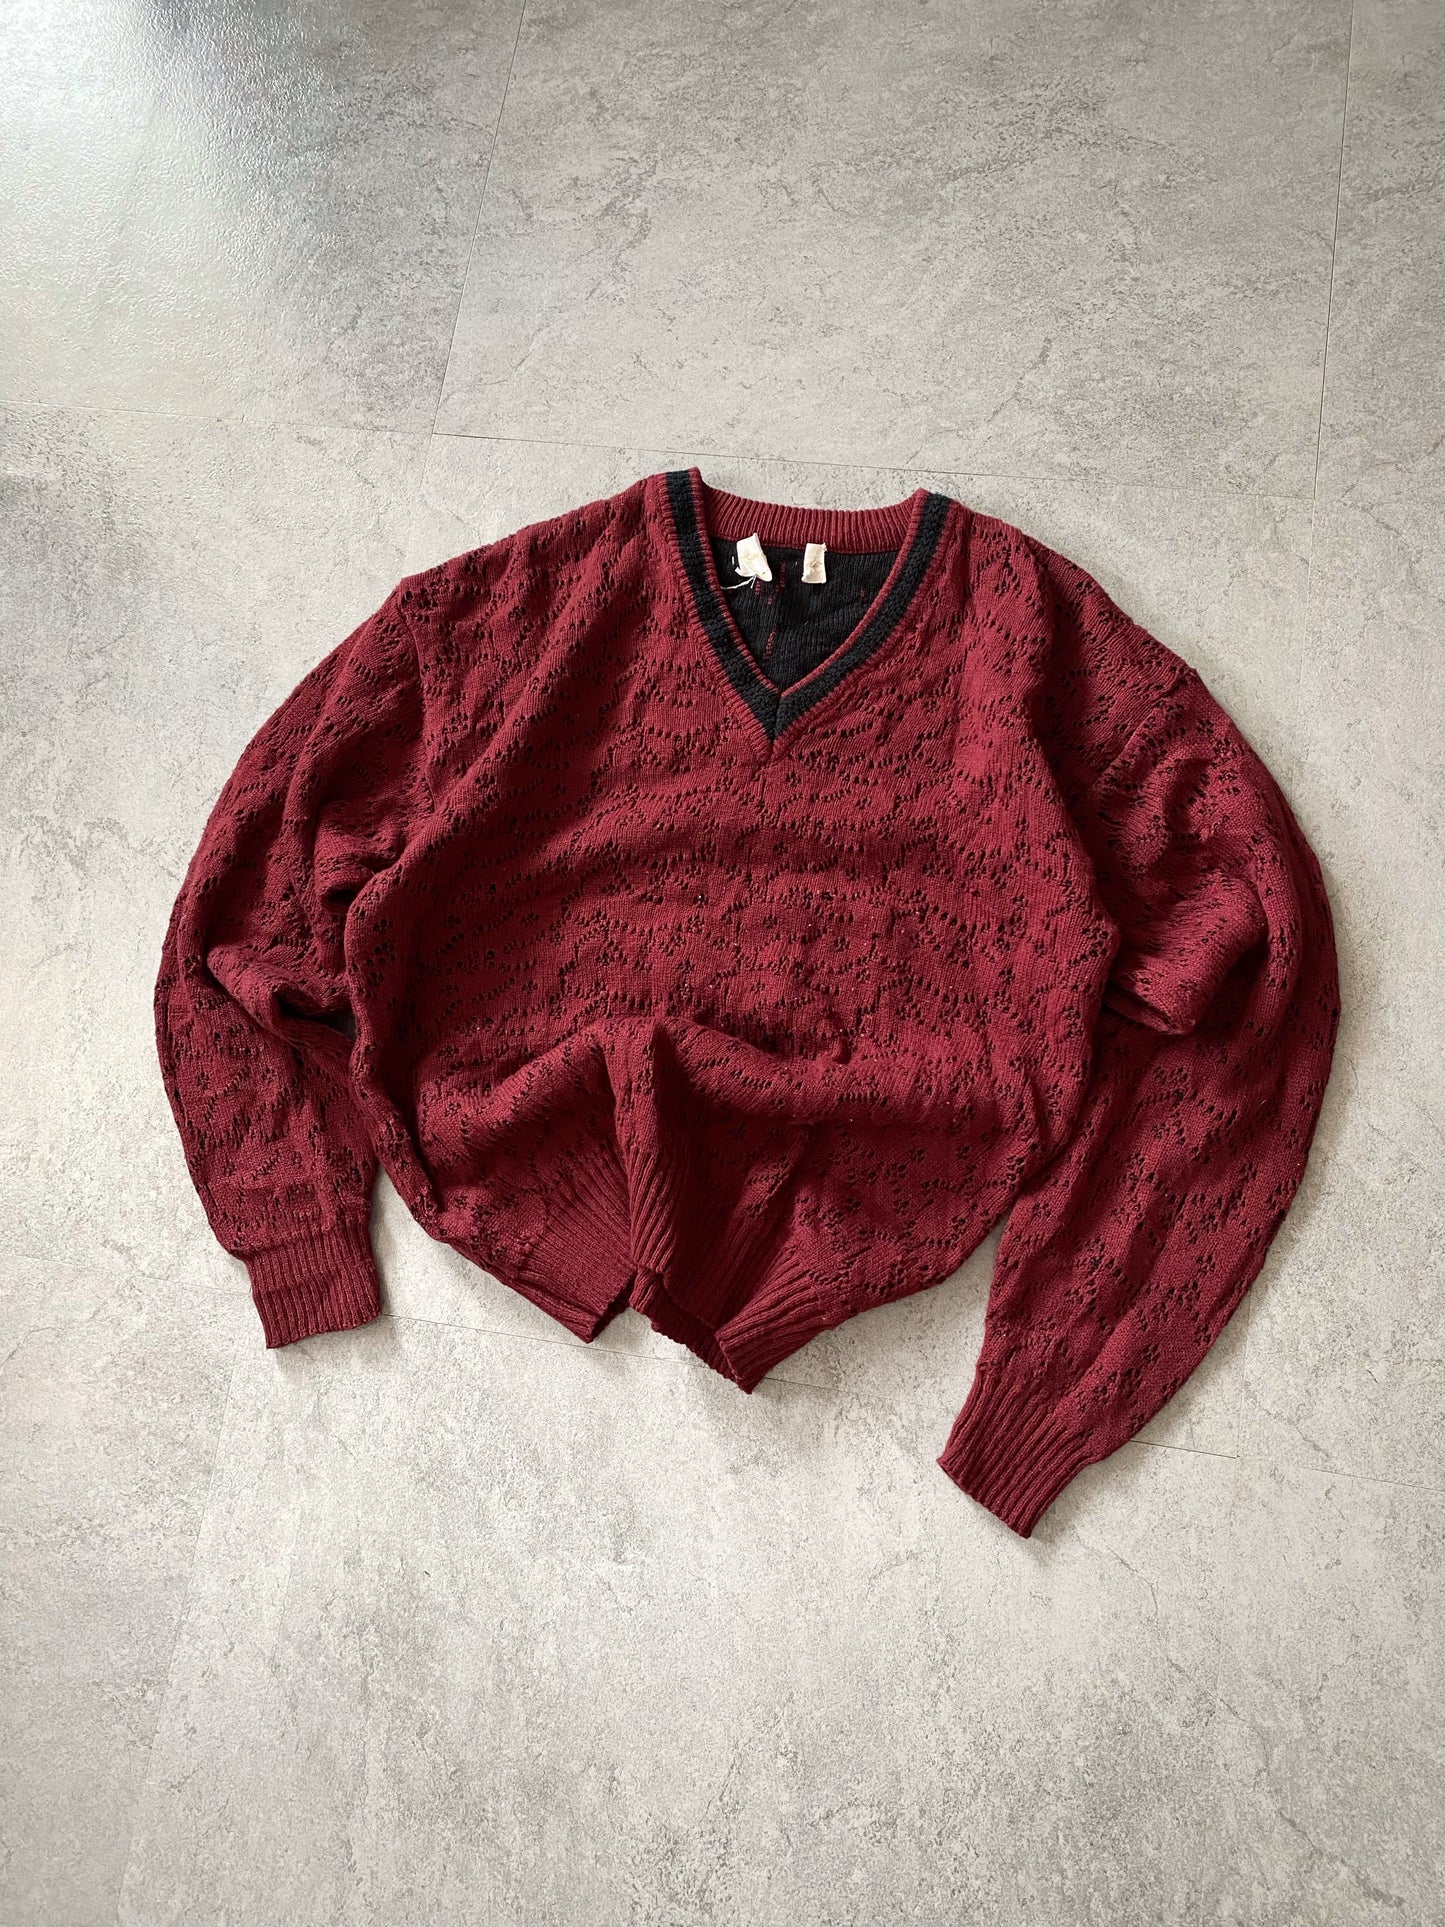 90s Vintage Sweater